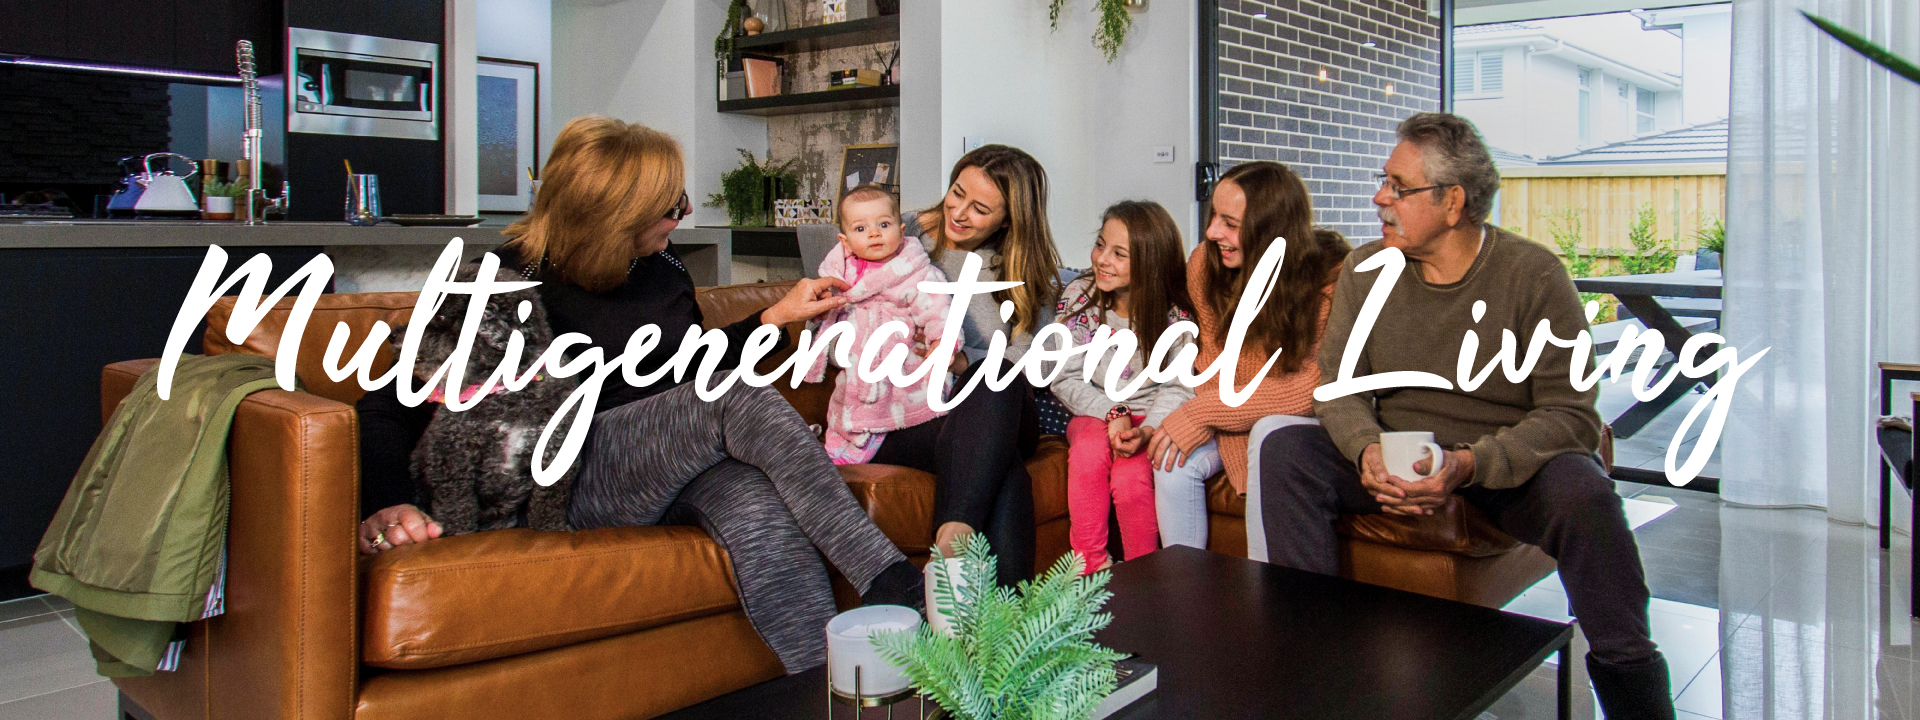 Multigenerational-Intergenerational - Living - home - design